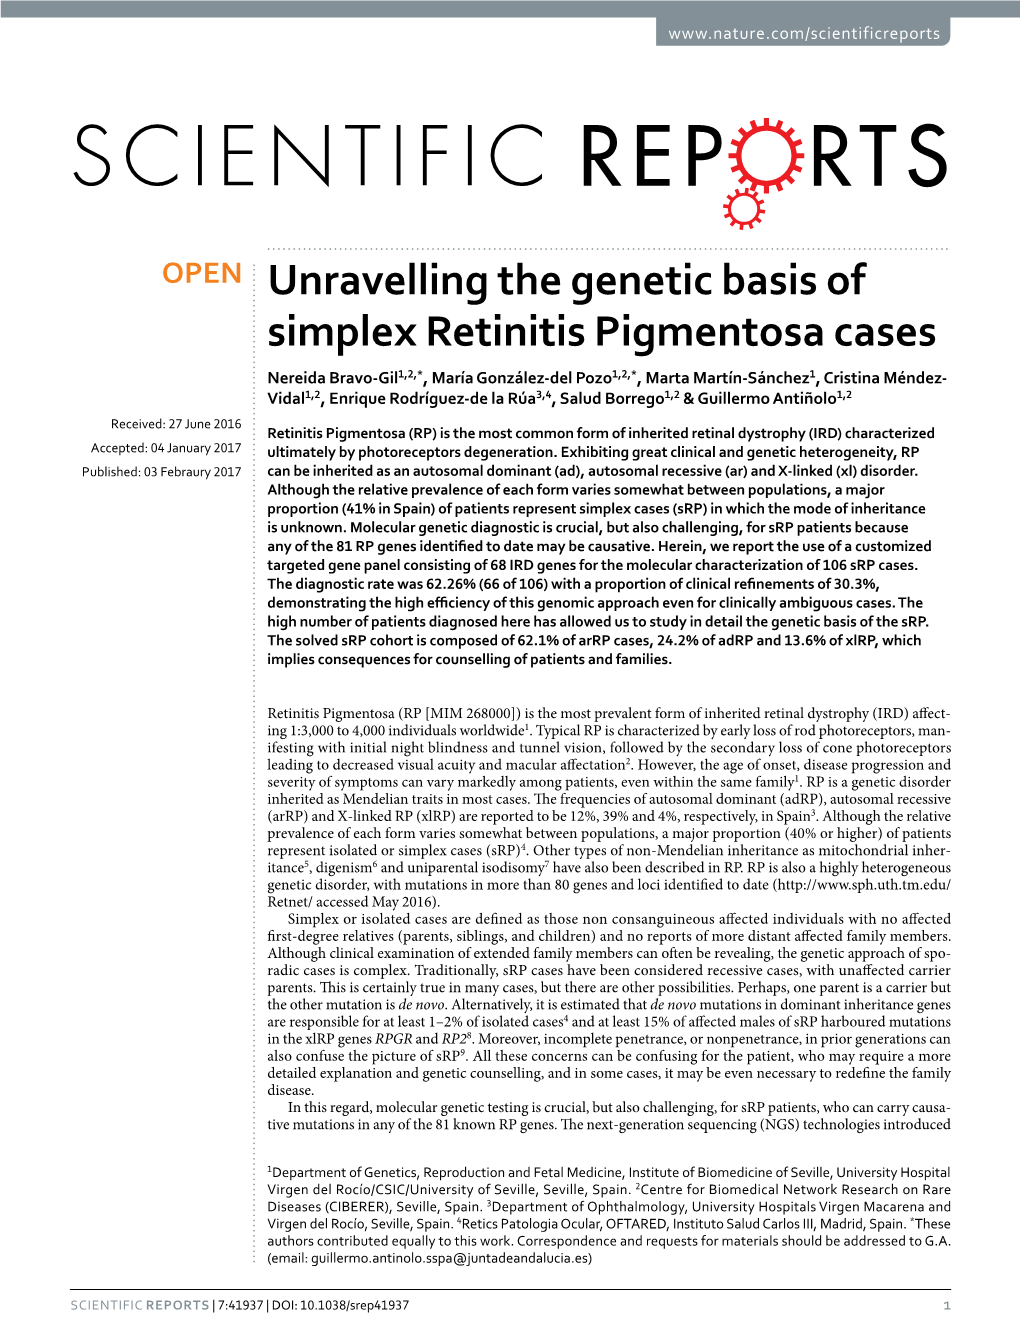 Unravelling the Genetic Basis of Simplex Retinitis Pigmentosa Cases